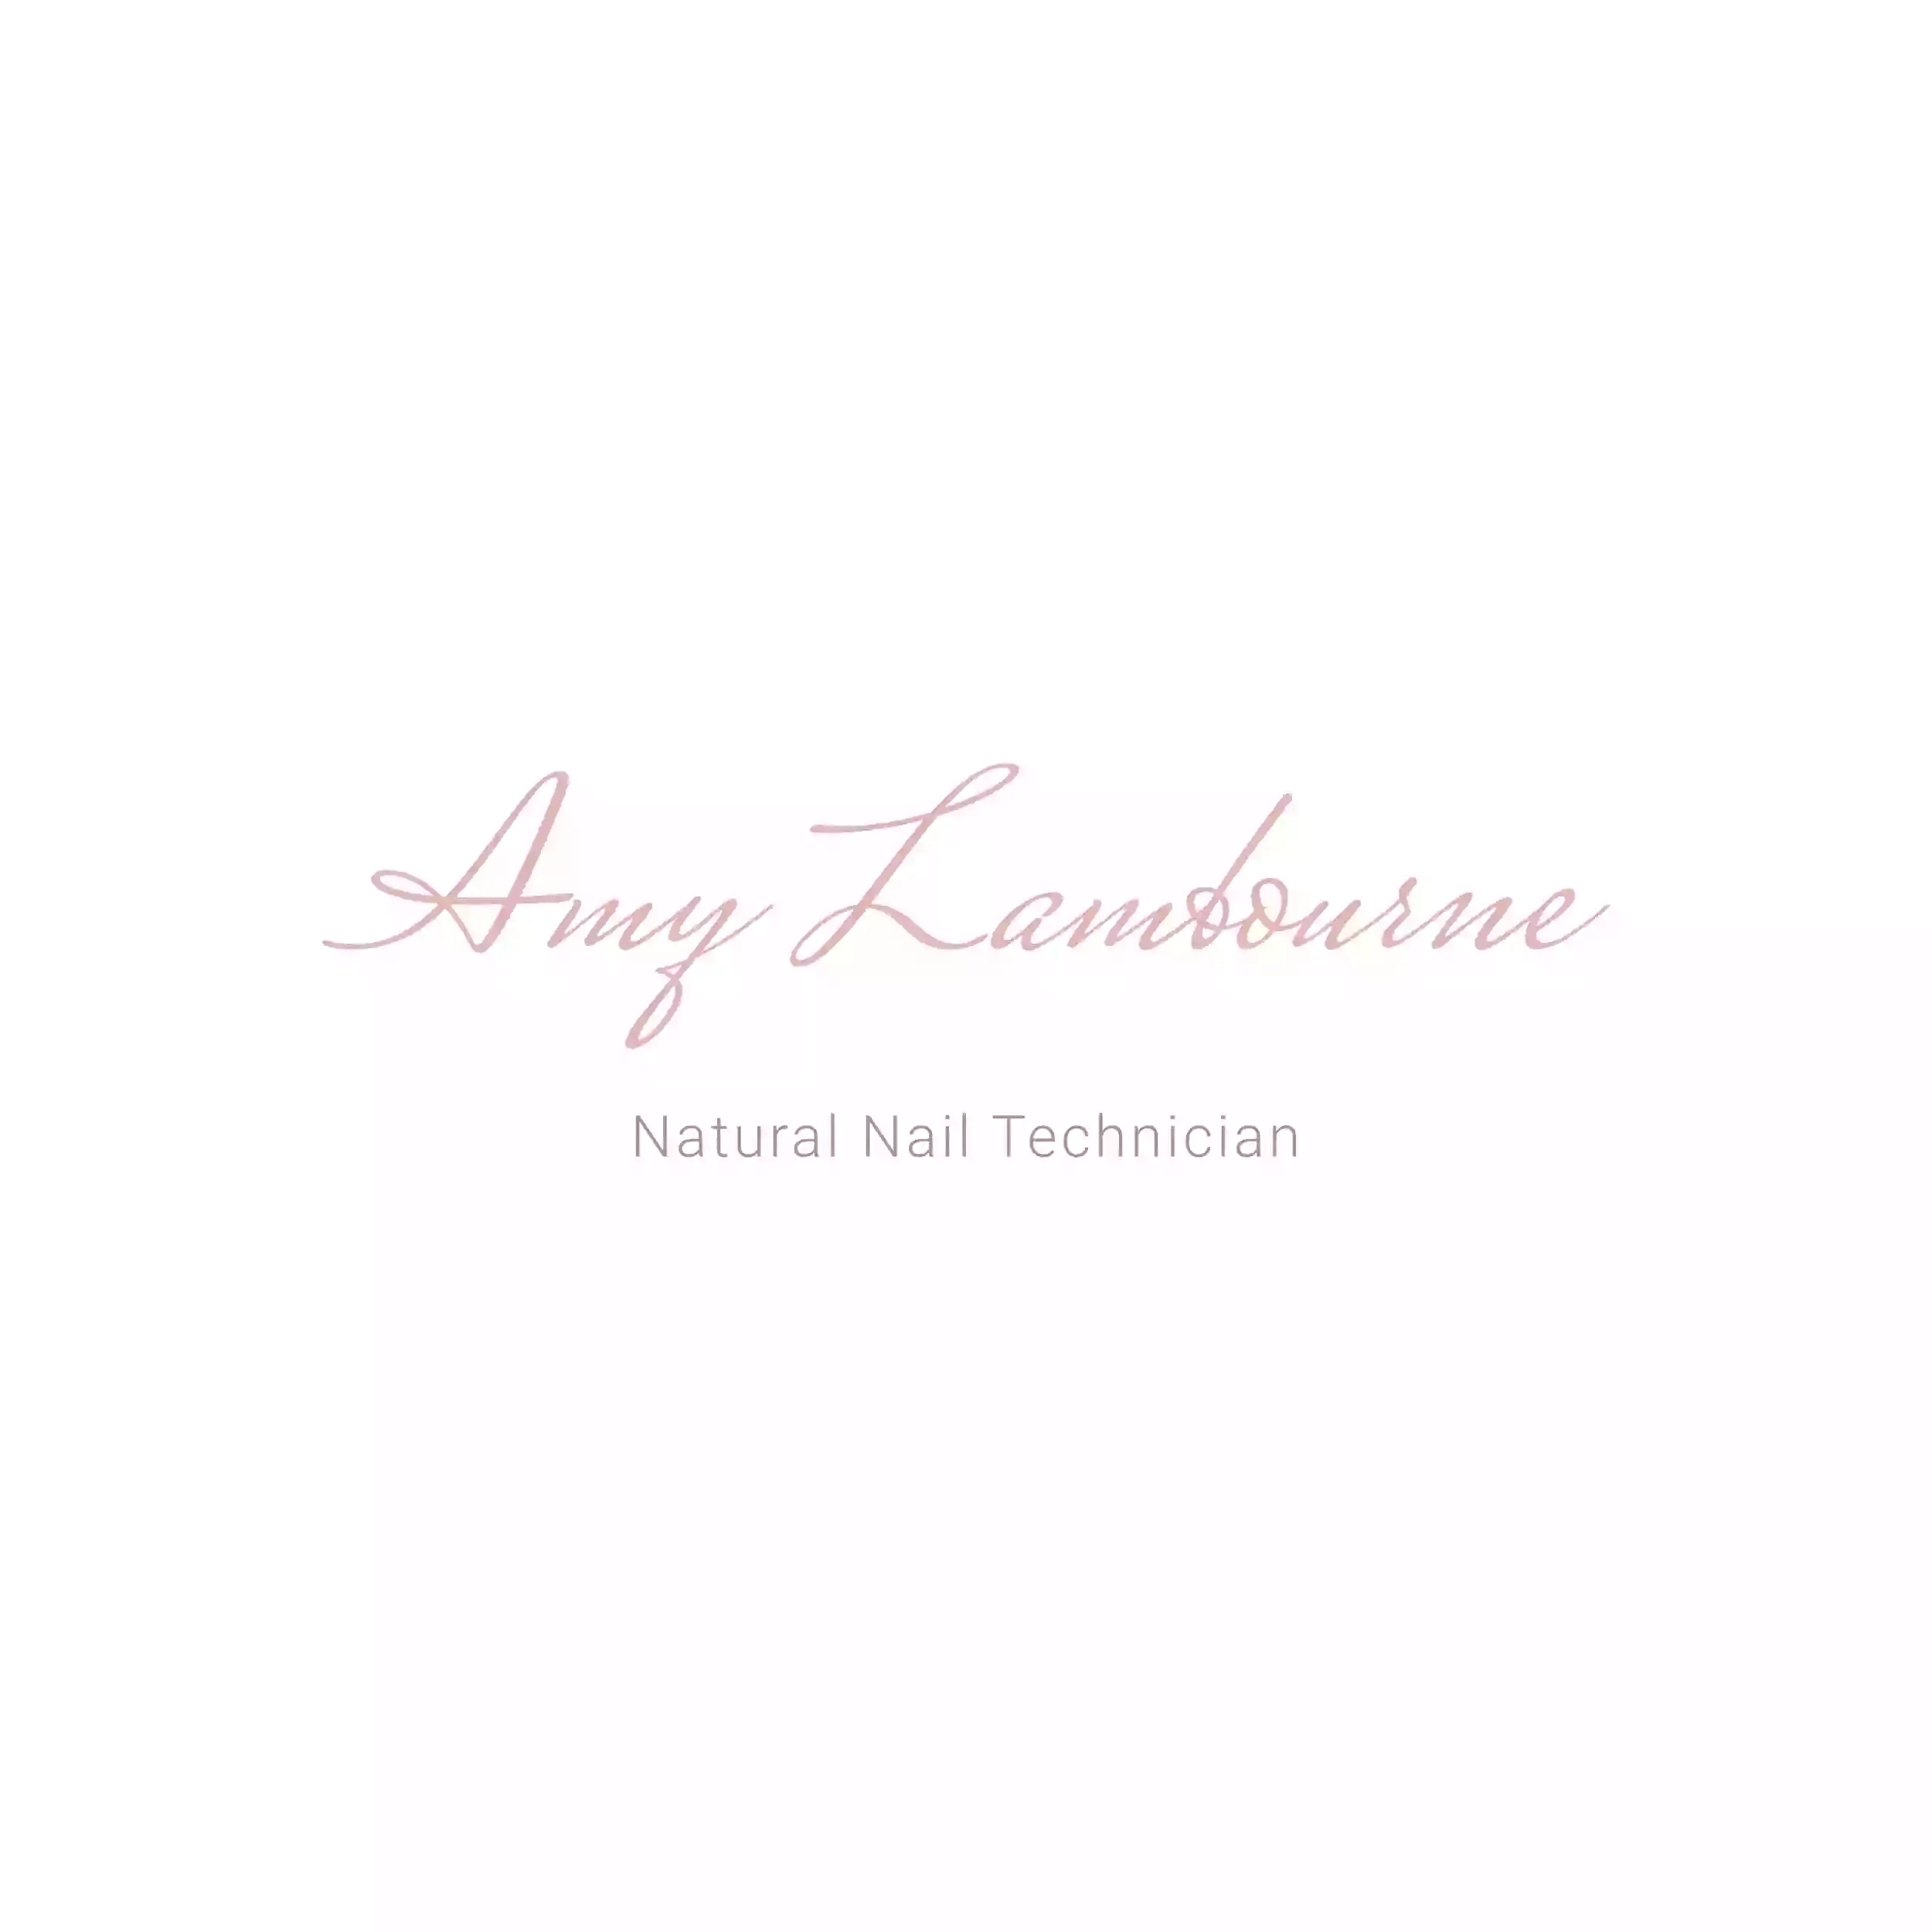 Amy Lambourne - Natural Nail Technician